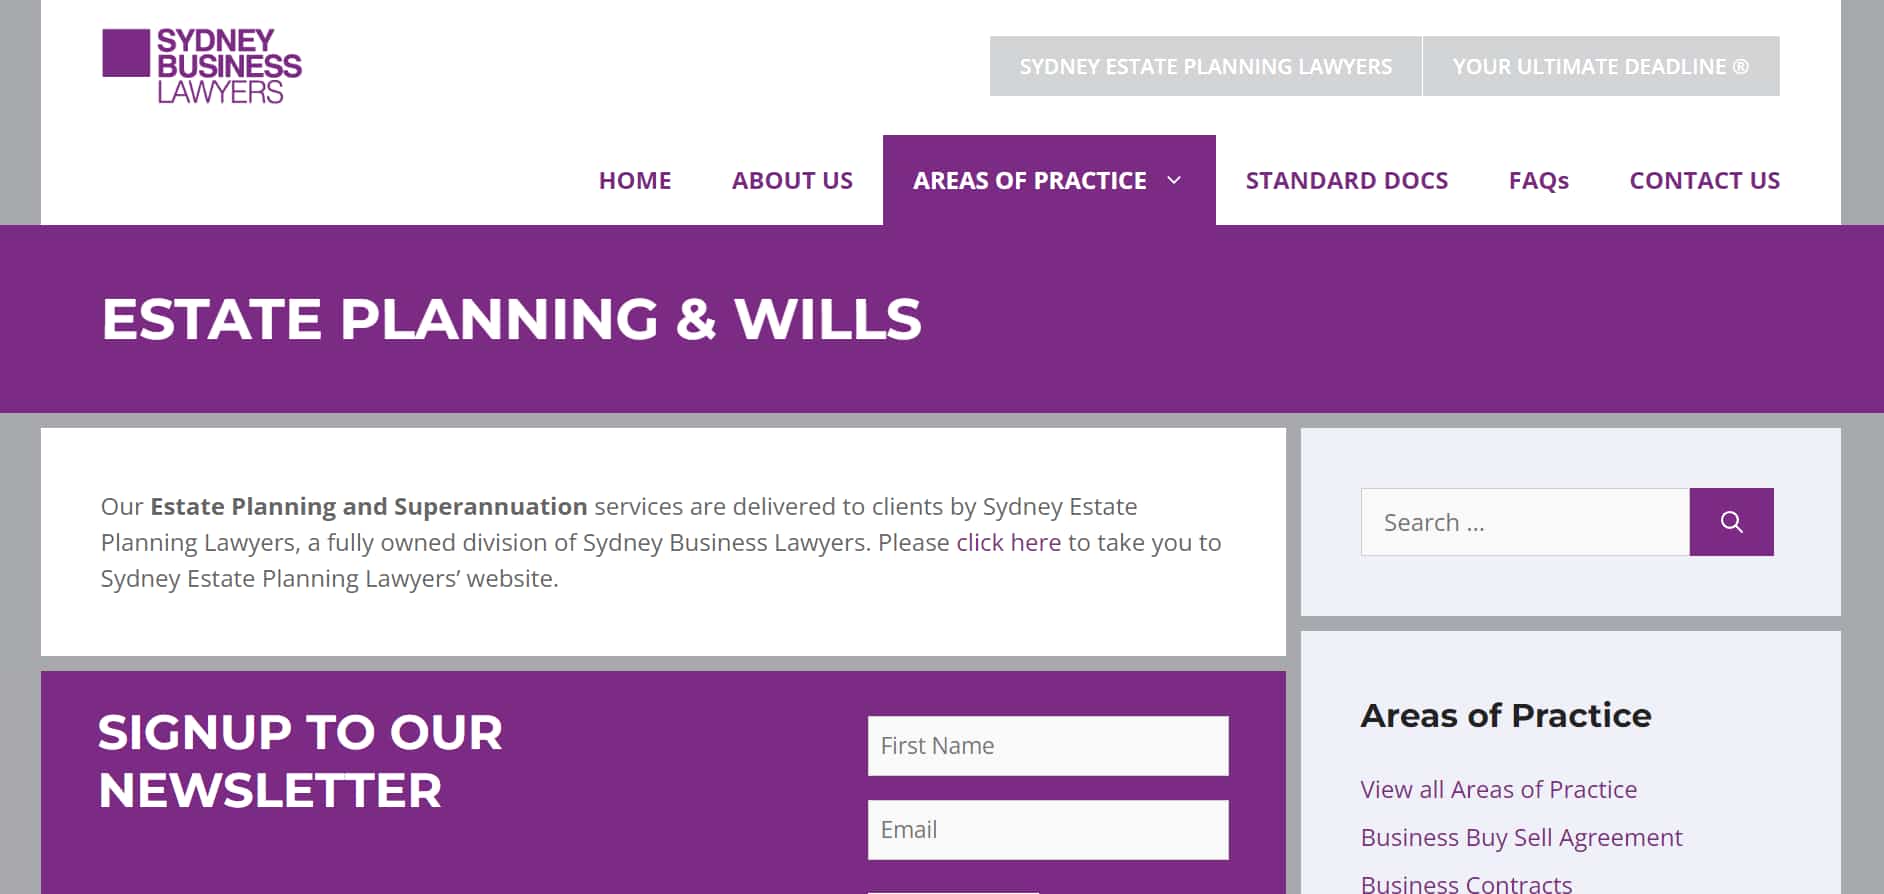 Sydney Business Lawyers